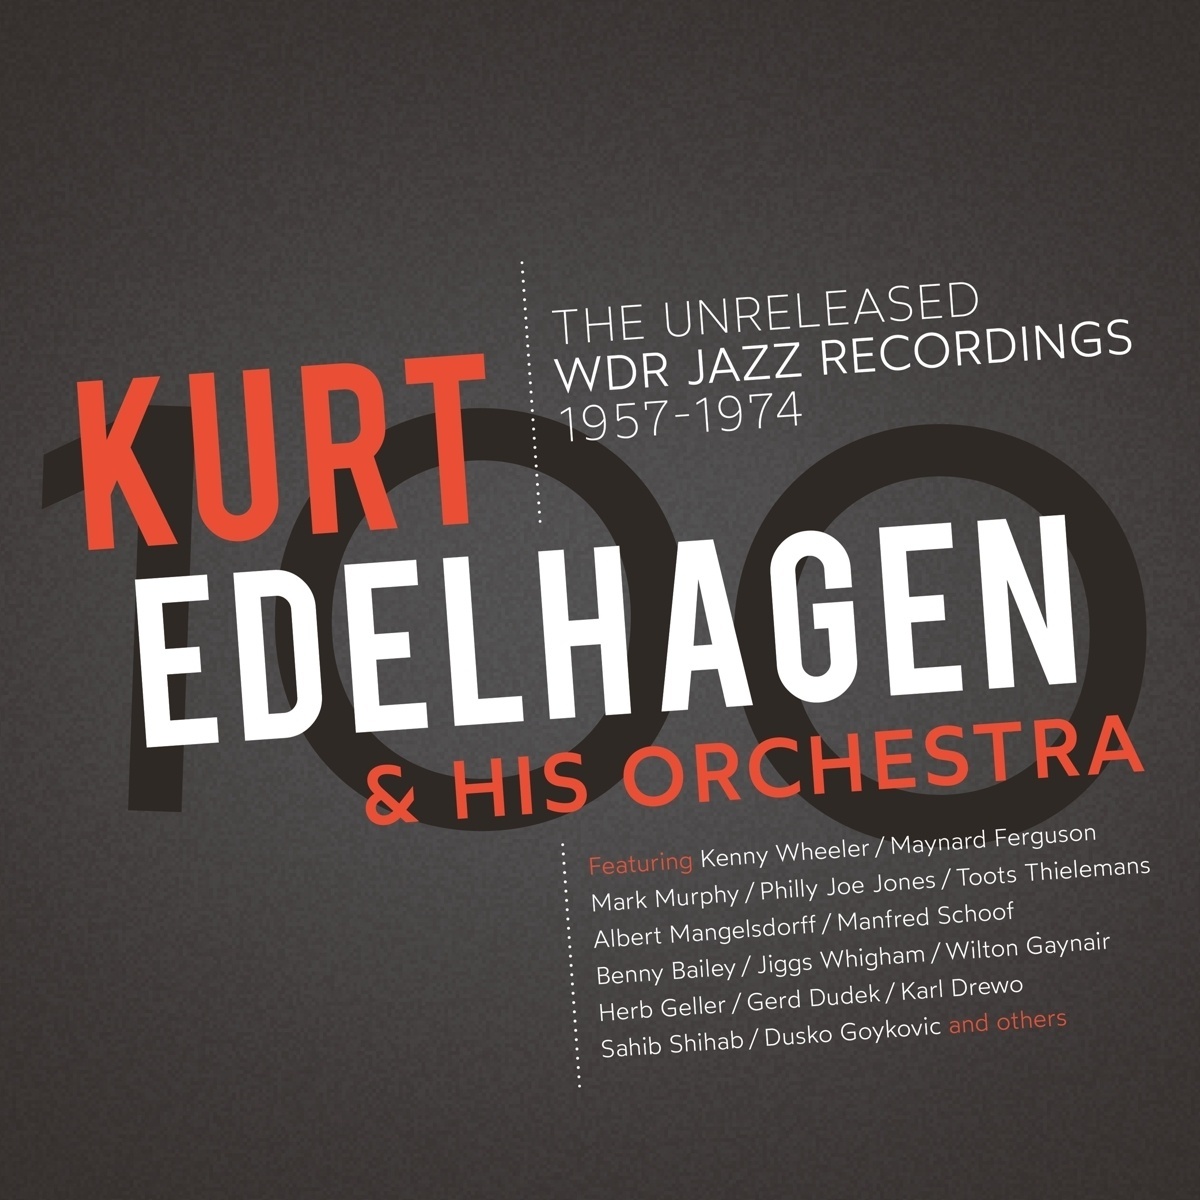 100-The Unreleased Wdr Jazz Recordings (180gr.) (Vinyl) - Kurt Edelhagen & His Orchestra. (LP)